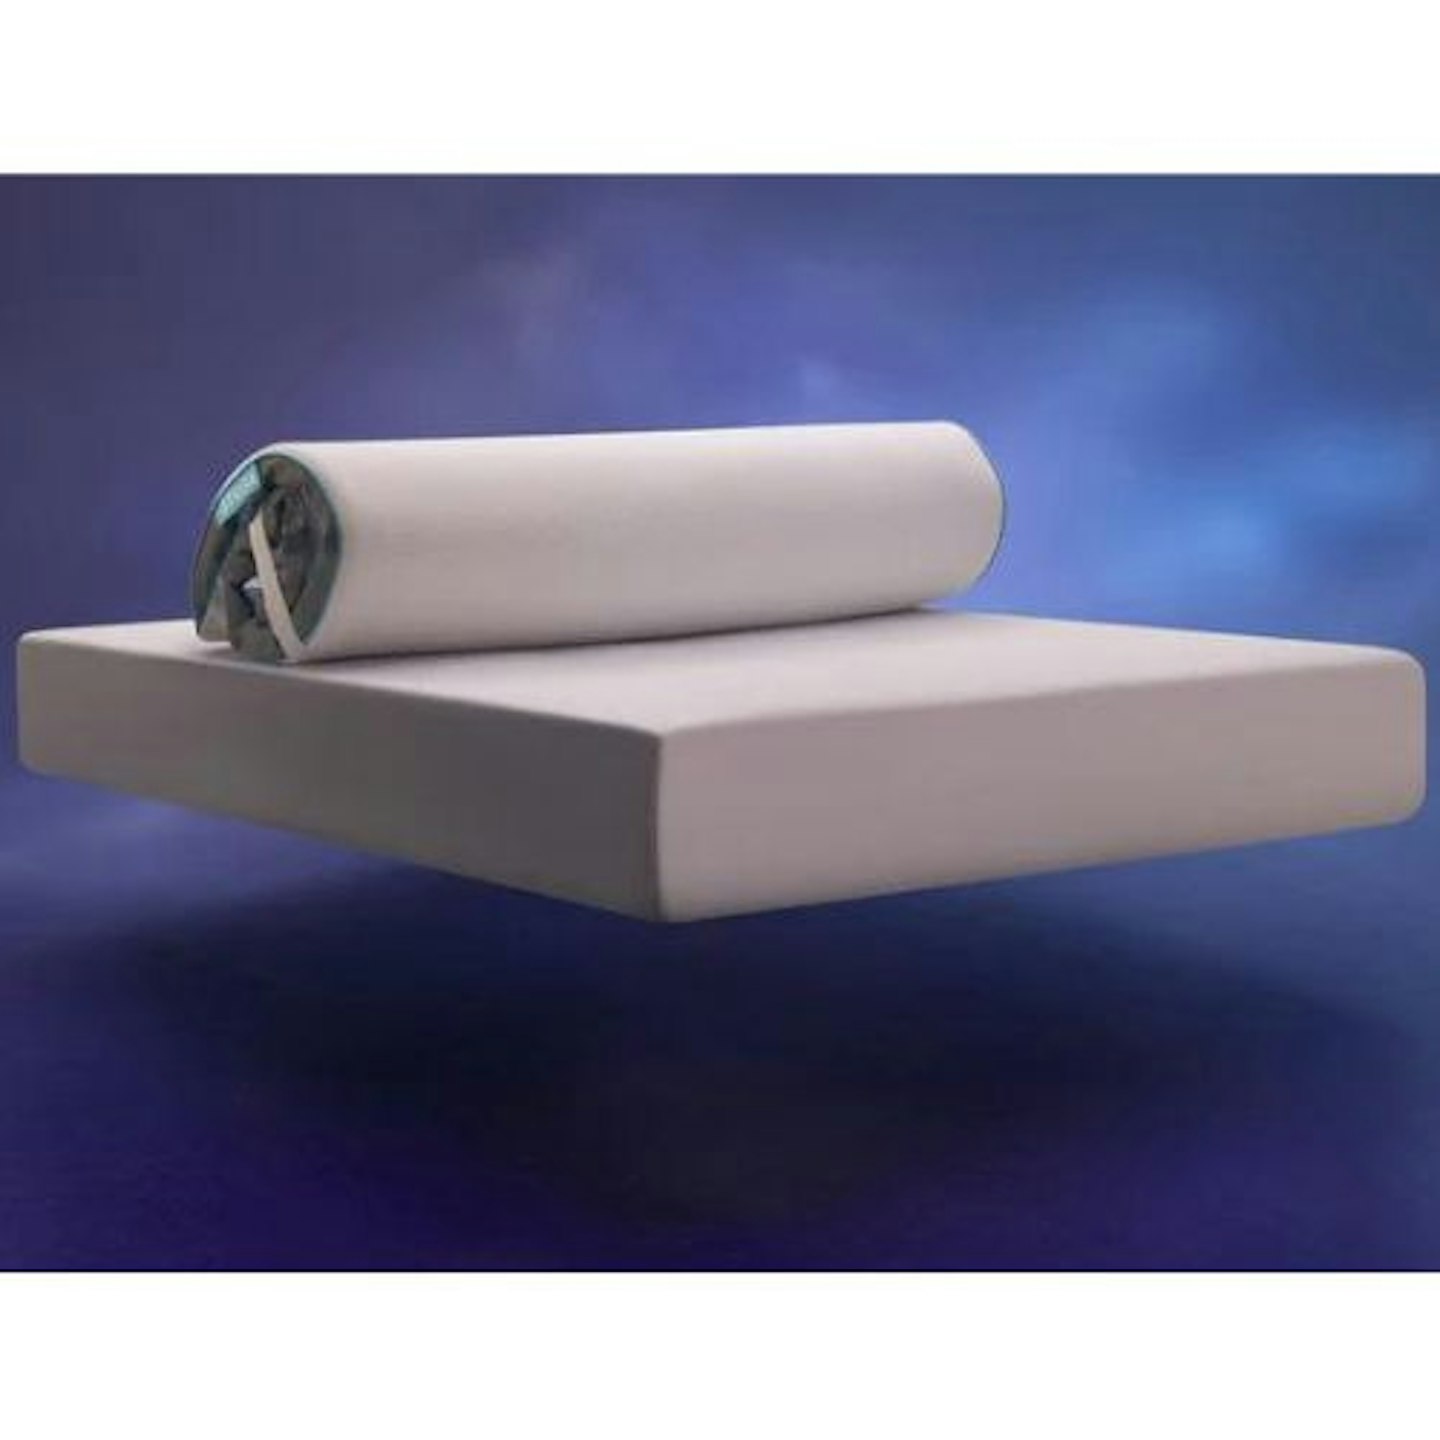 The best mattress topper for back pain: The Simba Hybrid® Topper